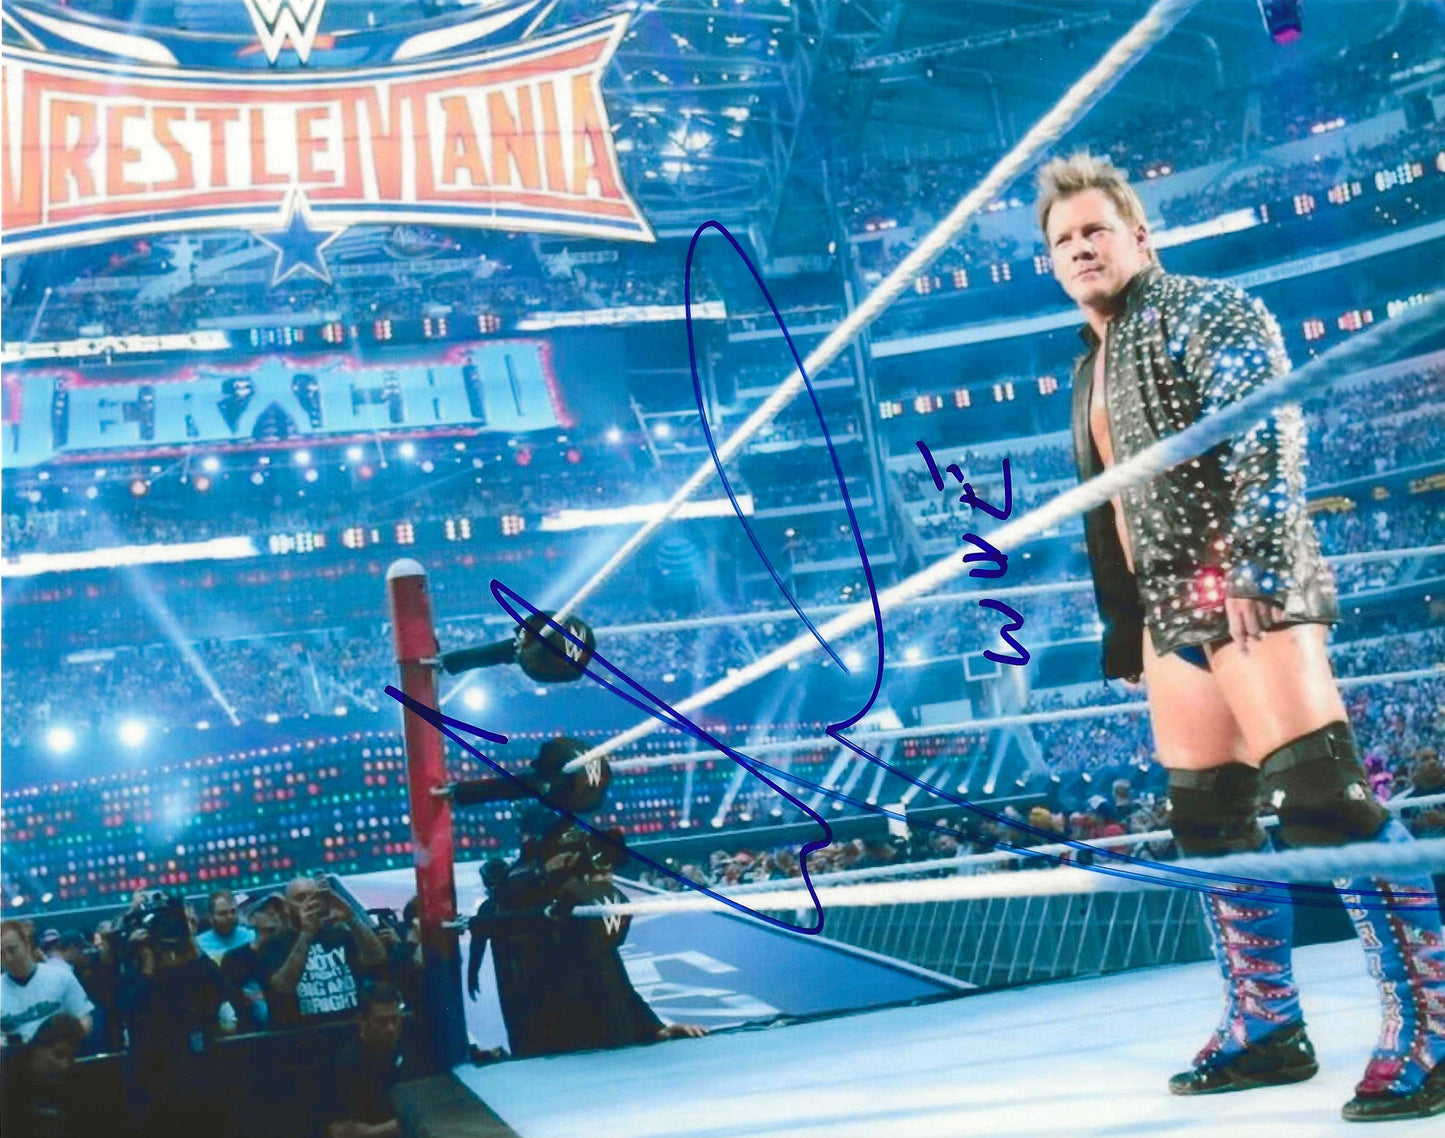 Chris Jericho Autographed Signed "WWE WRESTLEMANIA" 8X10 Photo Elite Promotions & Graphz Authentication